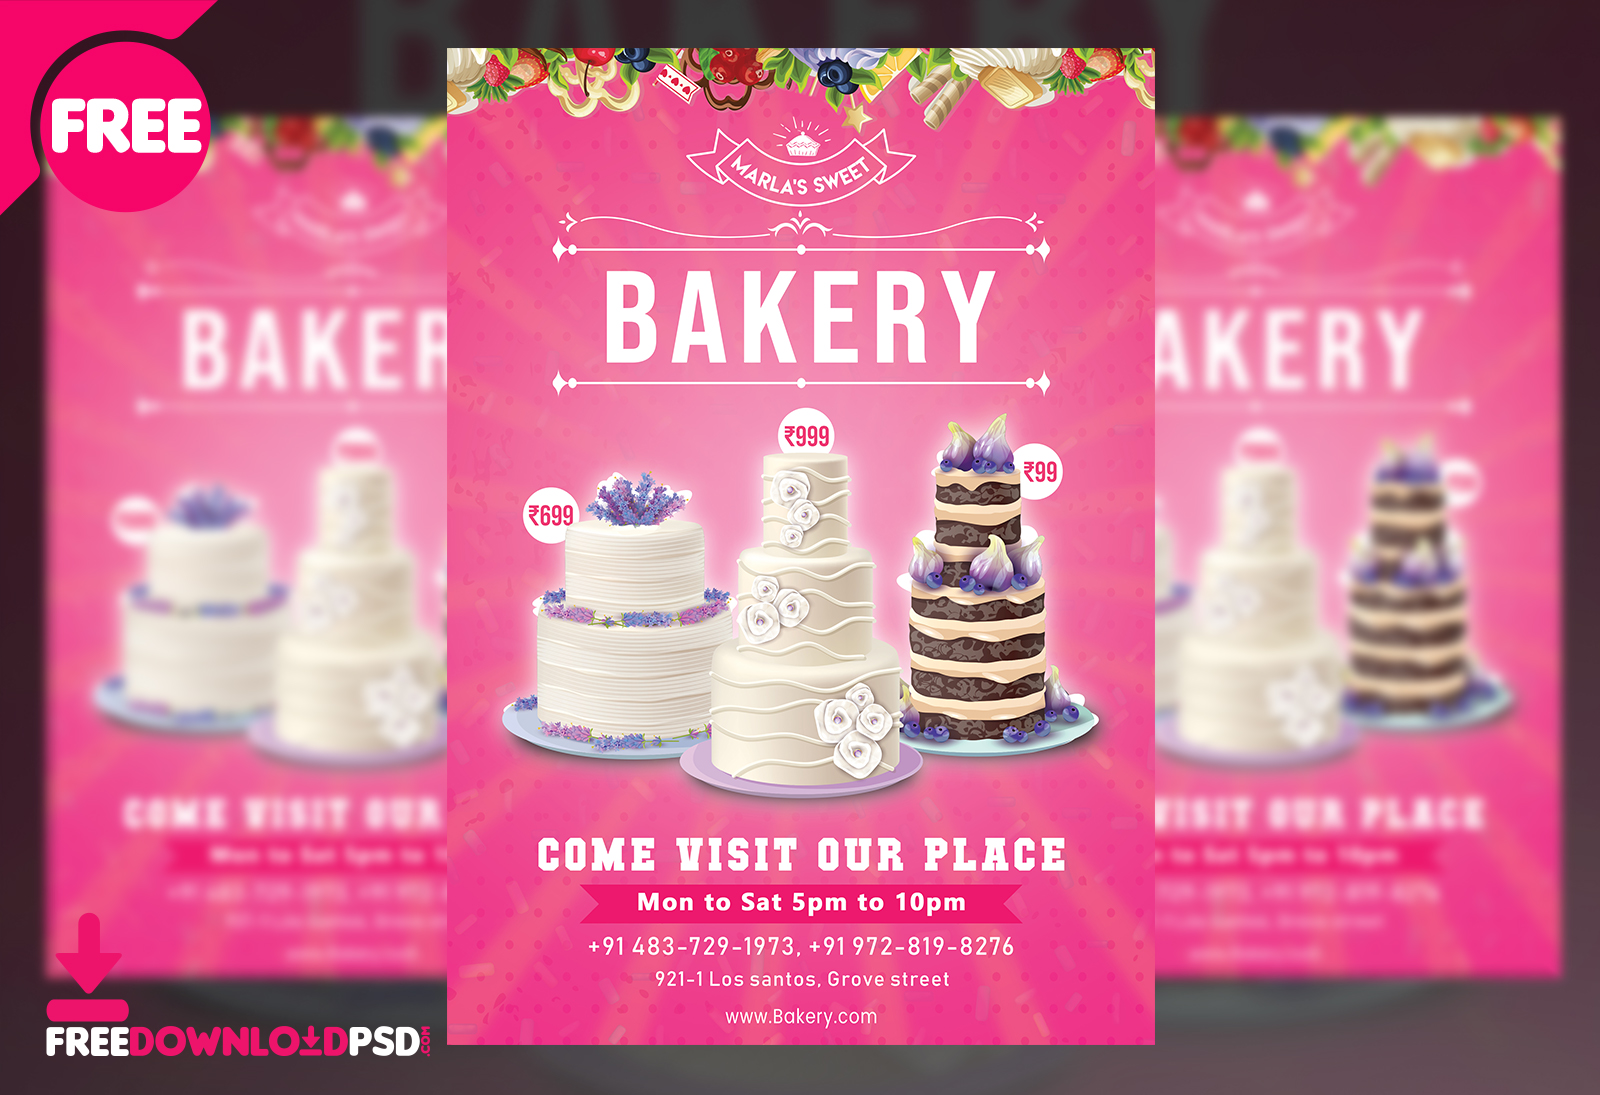 Bakery Flyer Free PSD Template FreedownloadPSD com